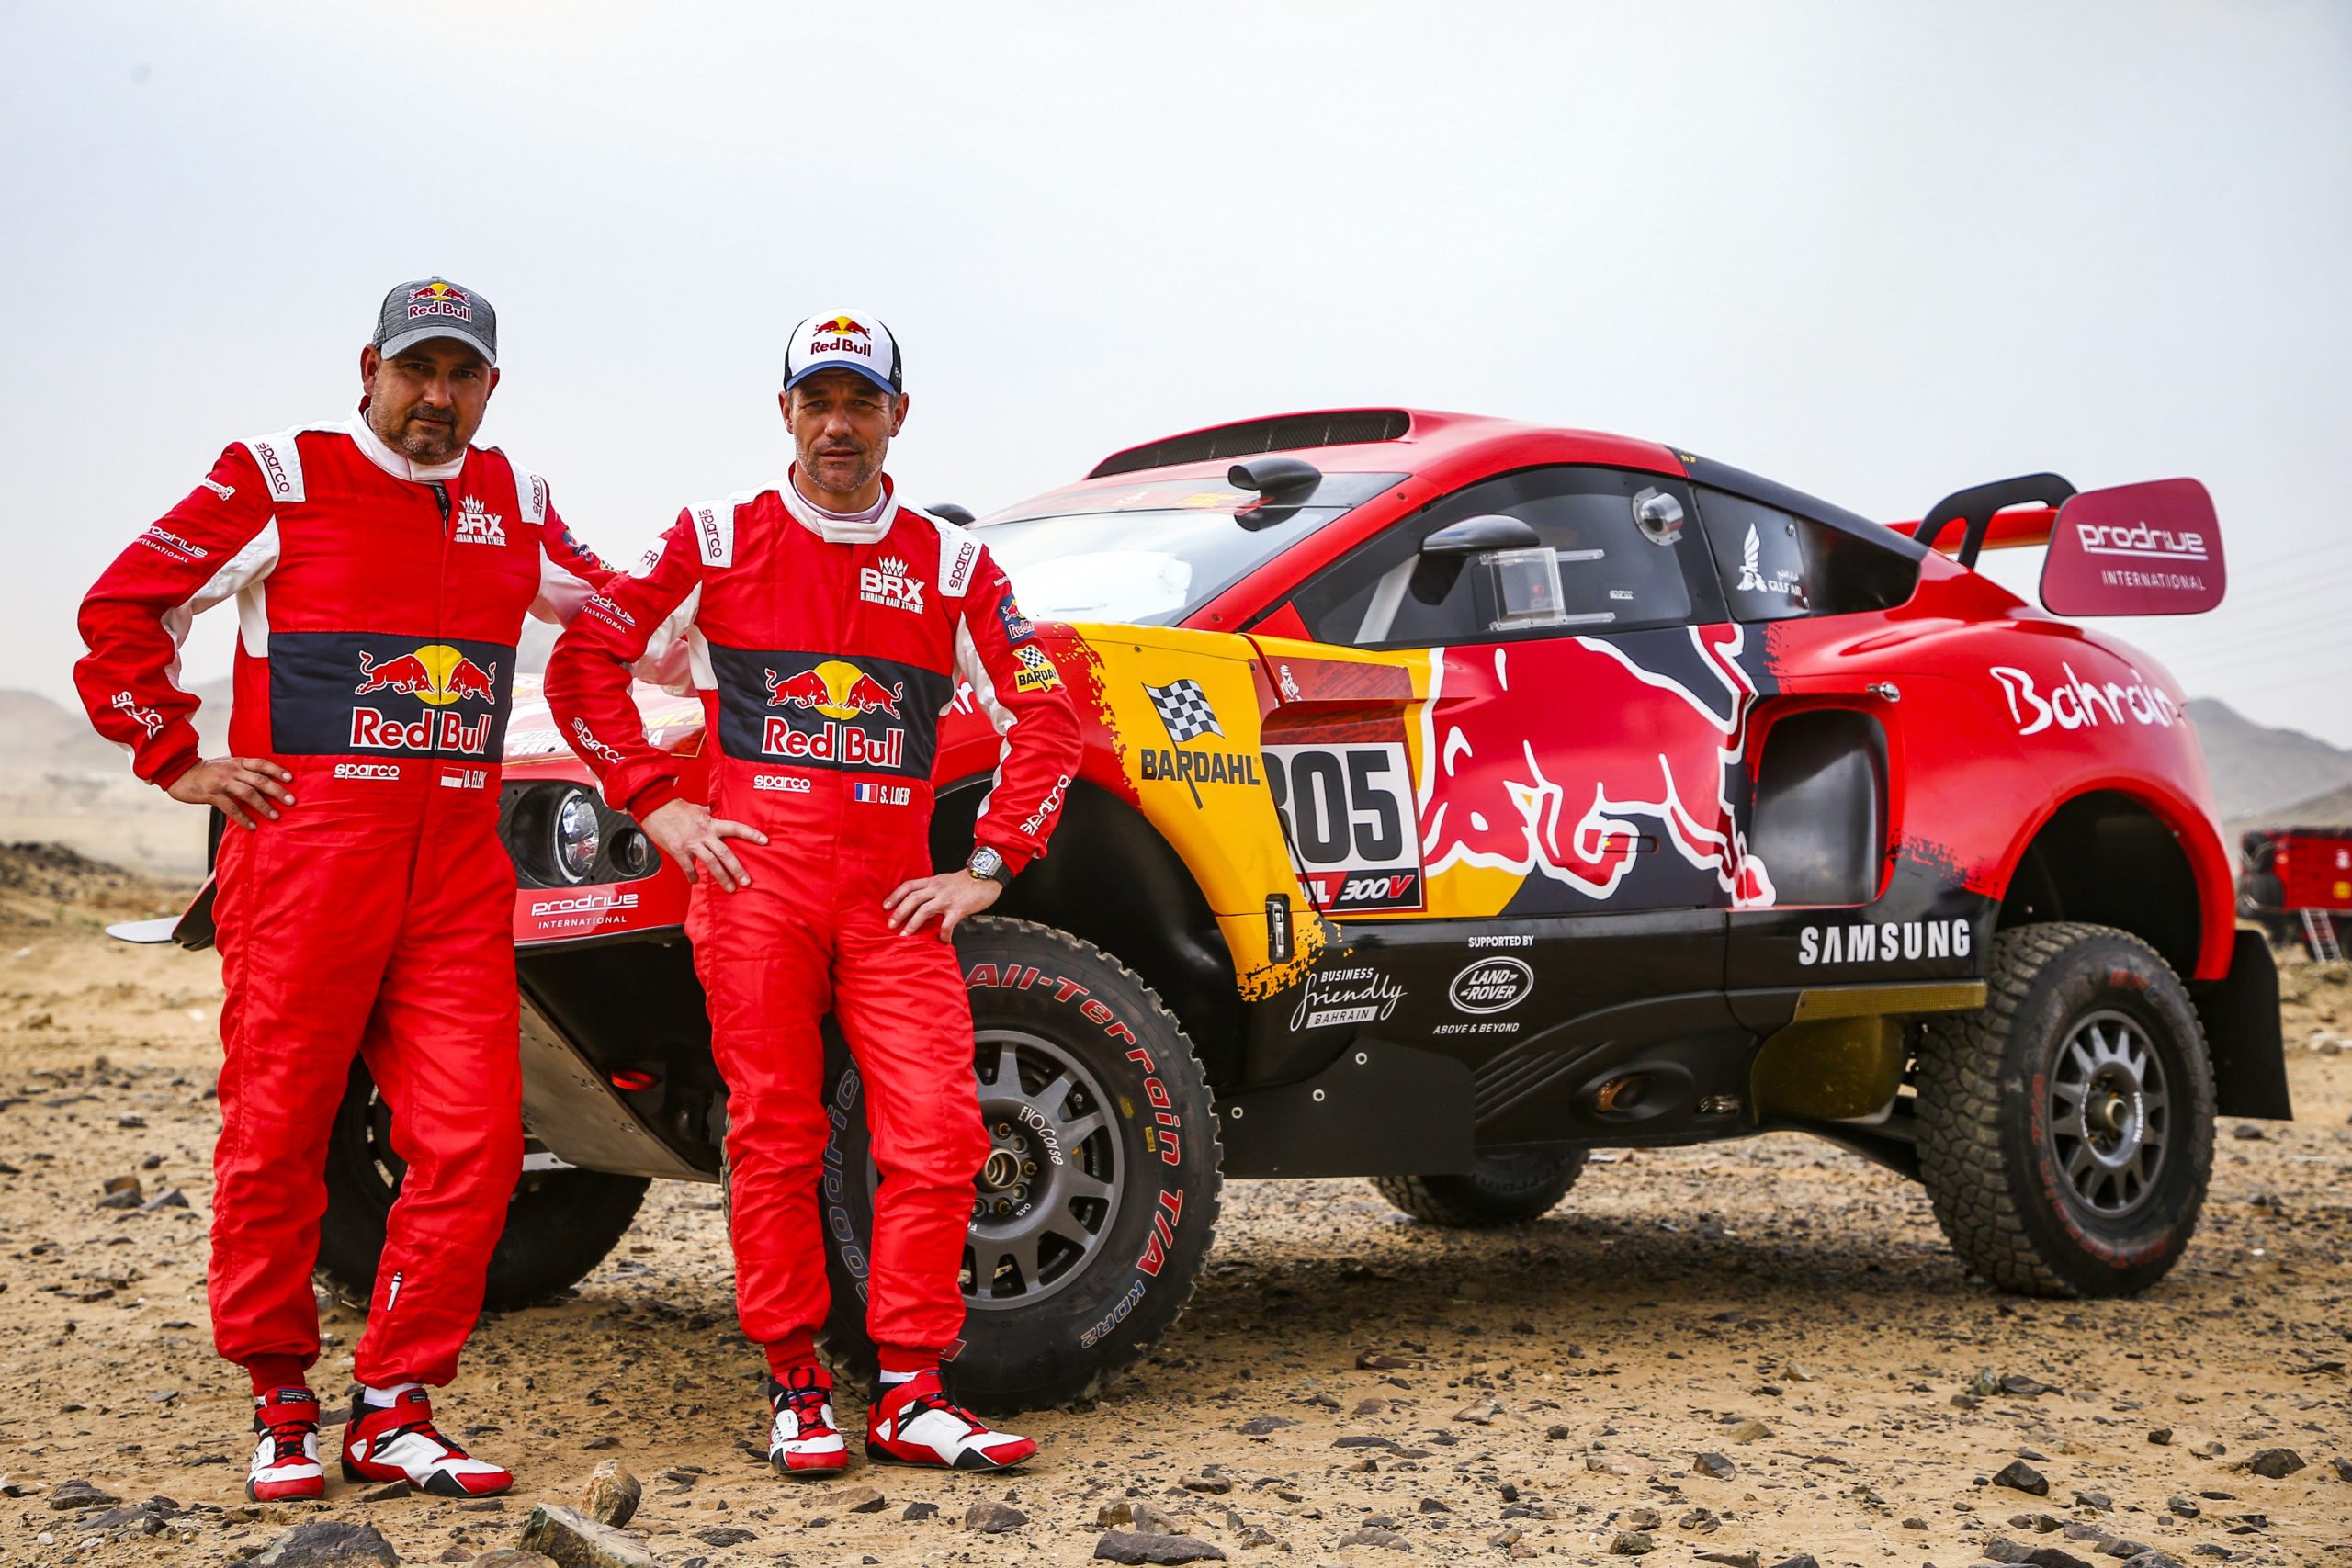 Co-Driver Daniel Elena and Driver Sébastien Loeb pose in front of their Prodrive Hunter rally car at the 2021 Dakar Rally in Saudi Arabia